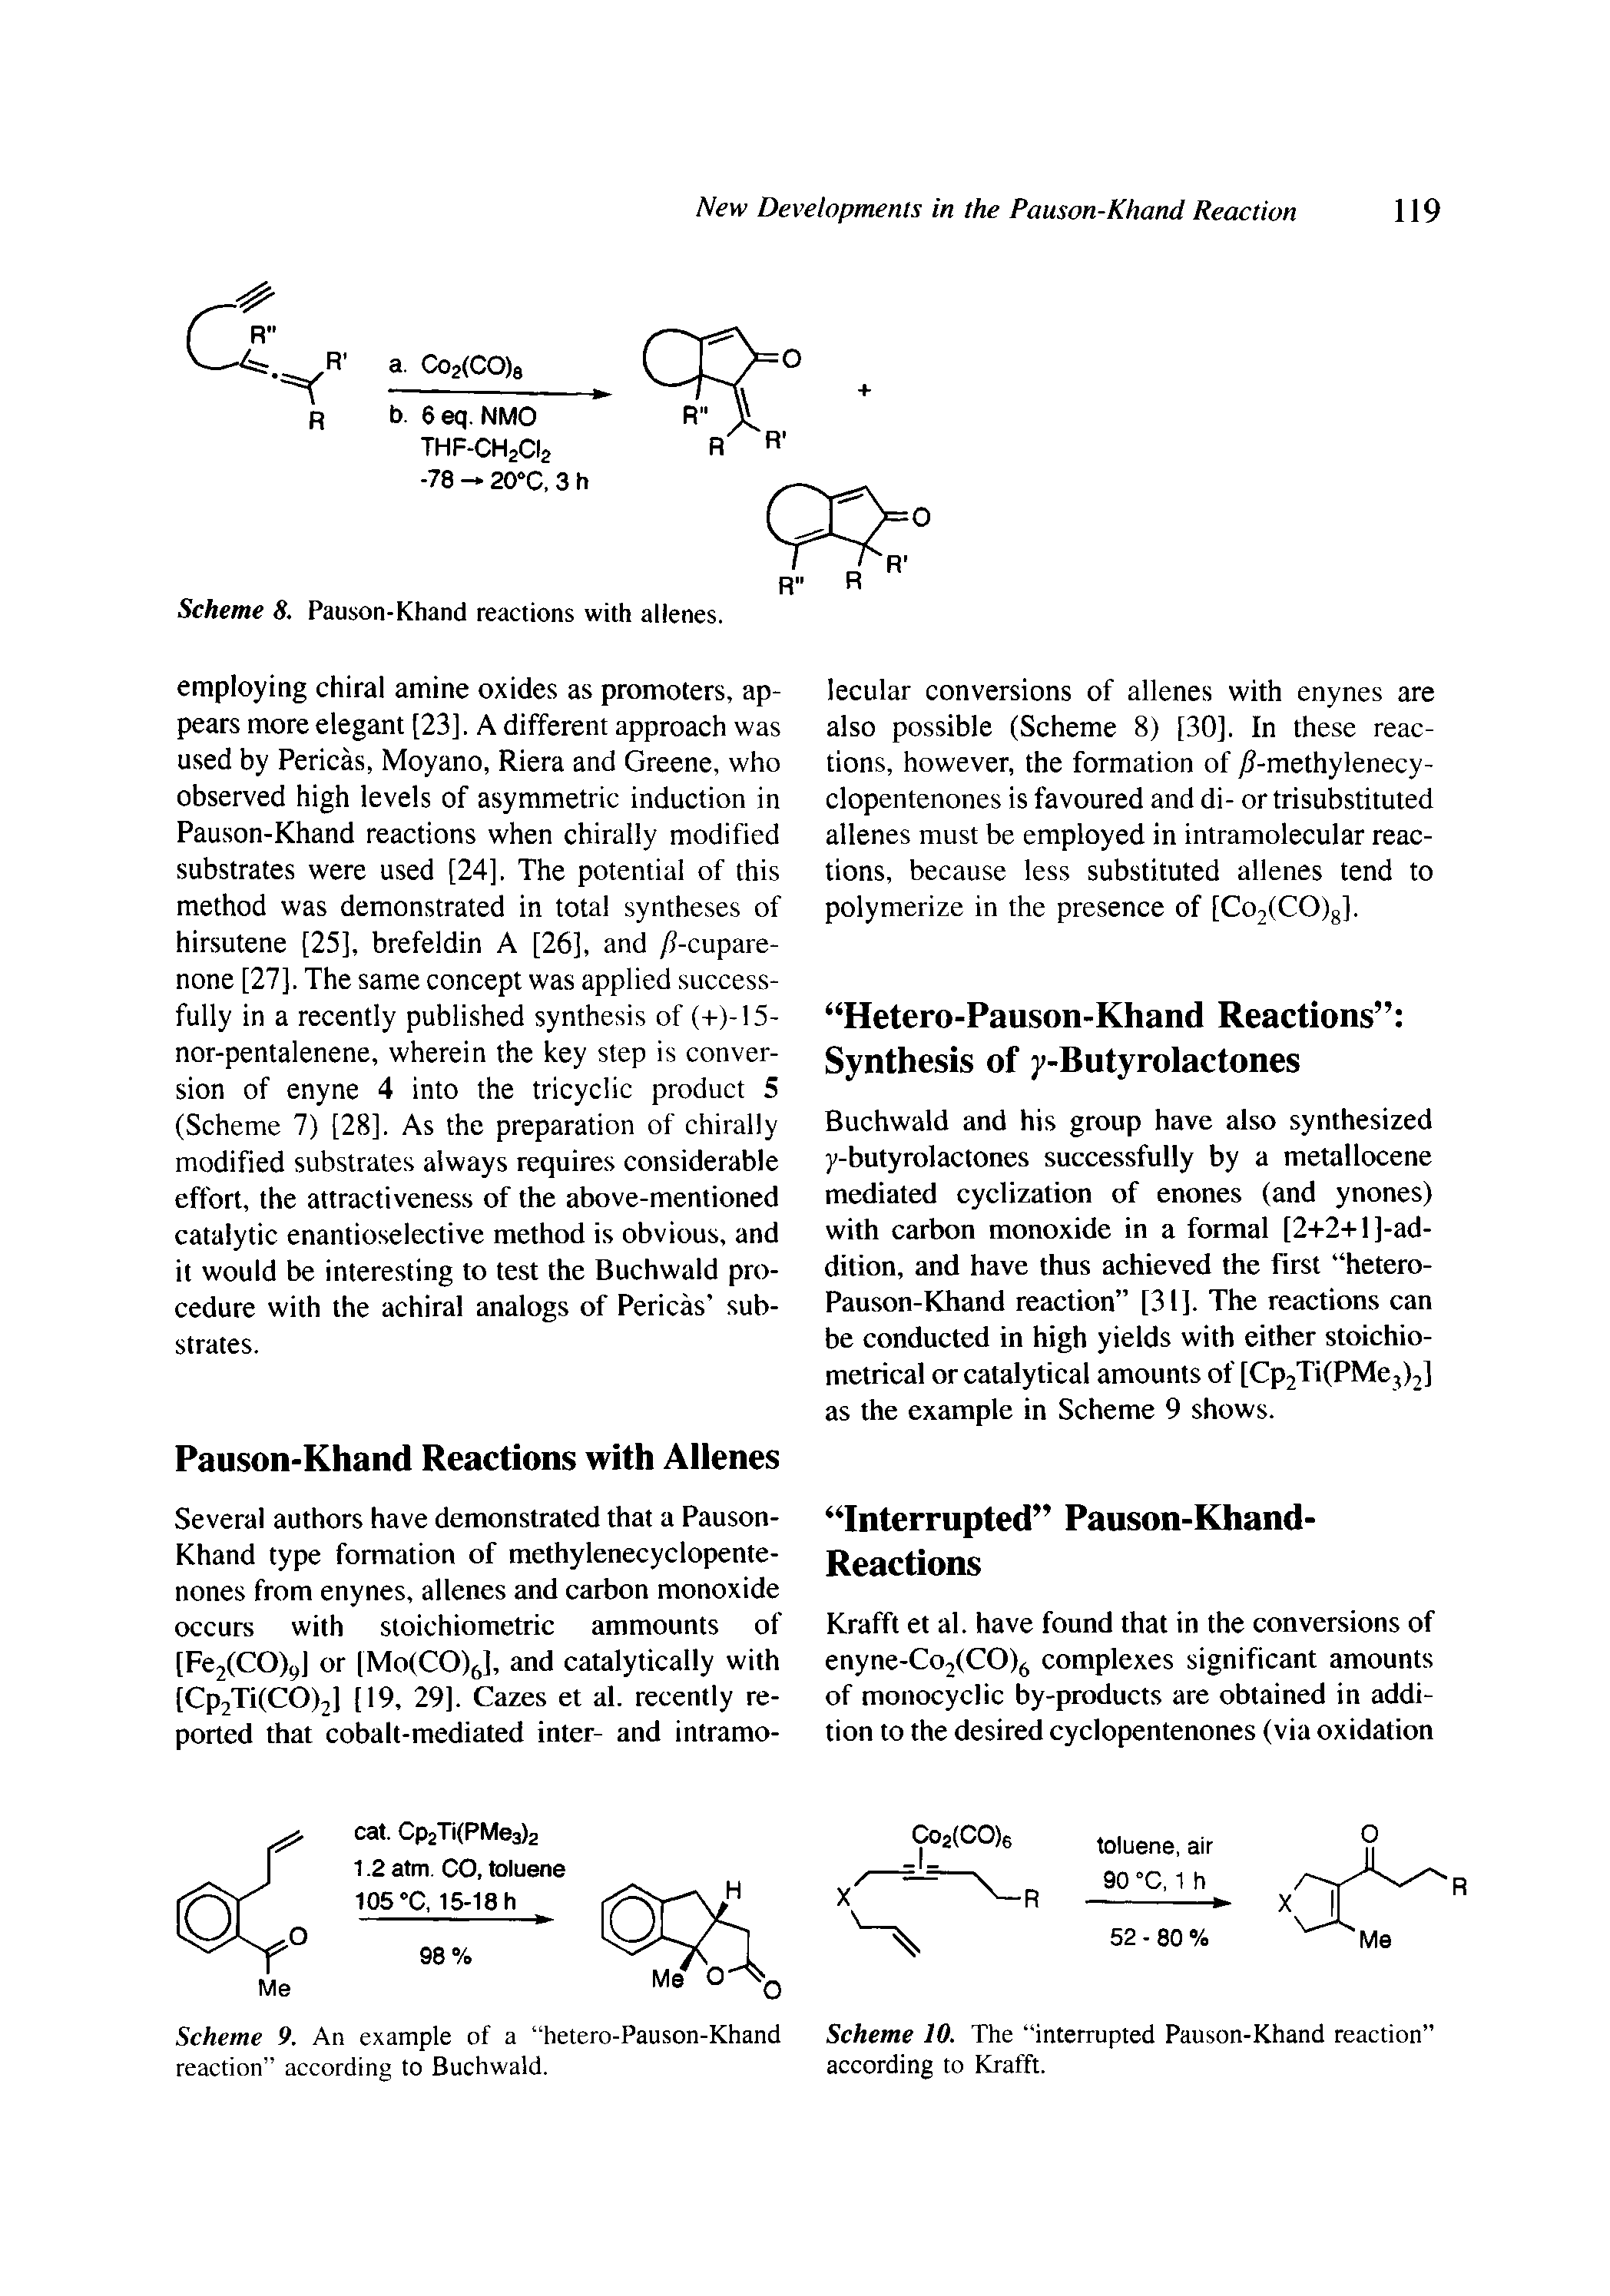 Scheme 9. An example of a hetero-Pauson-Khand reaction according to Buchwald.